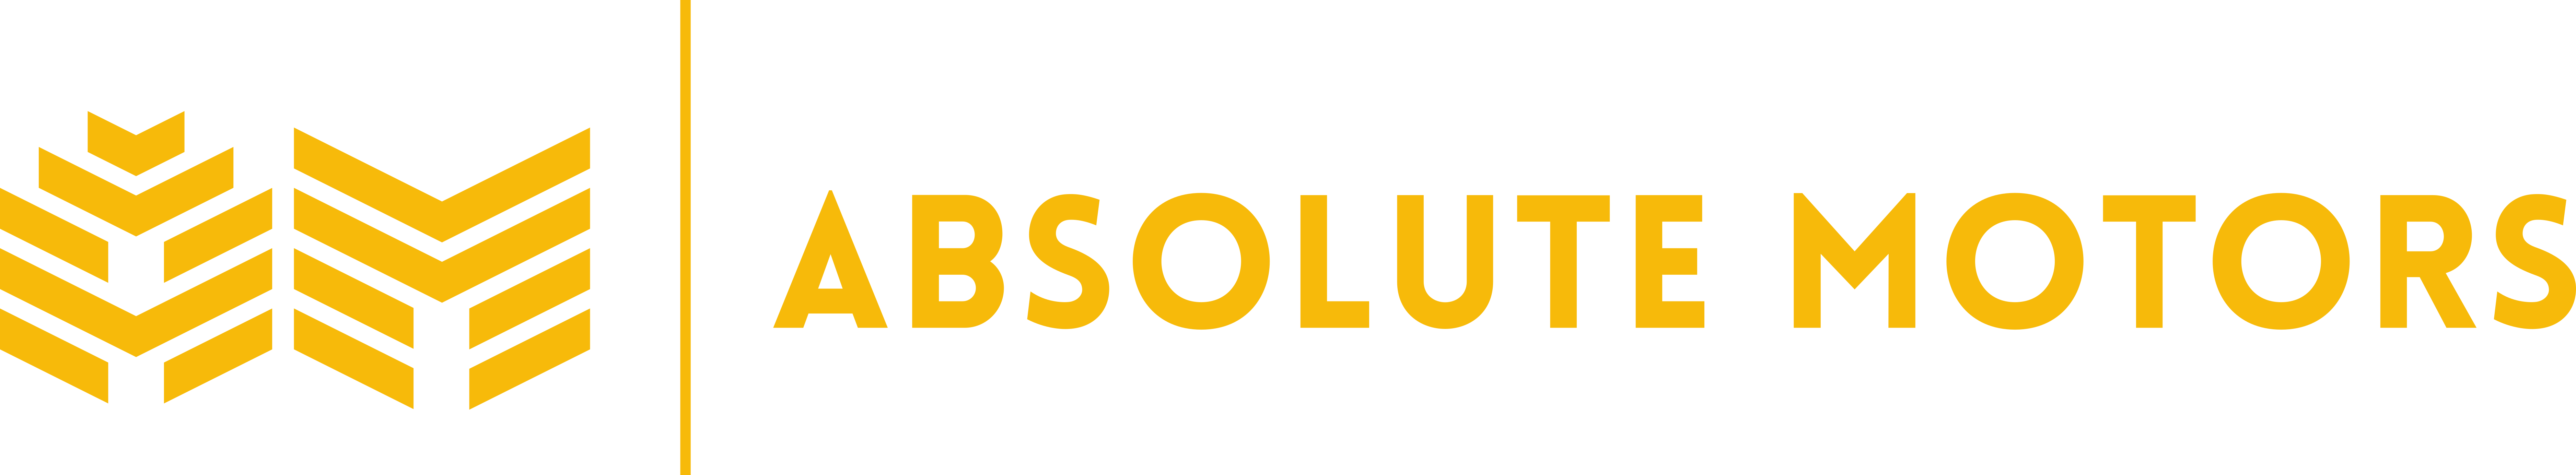 absolute motors logo